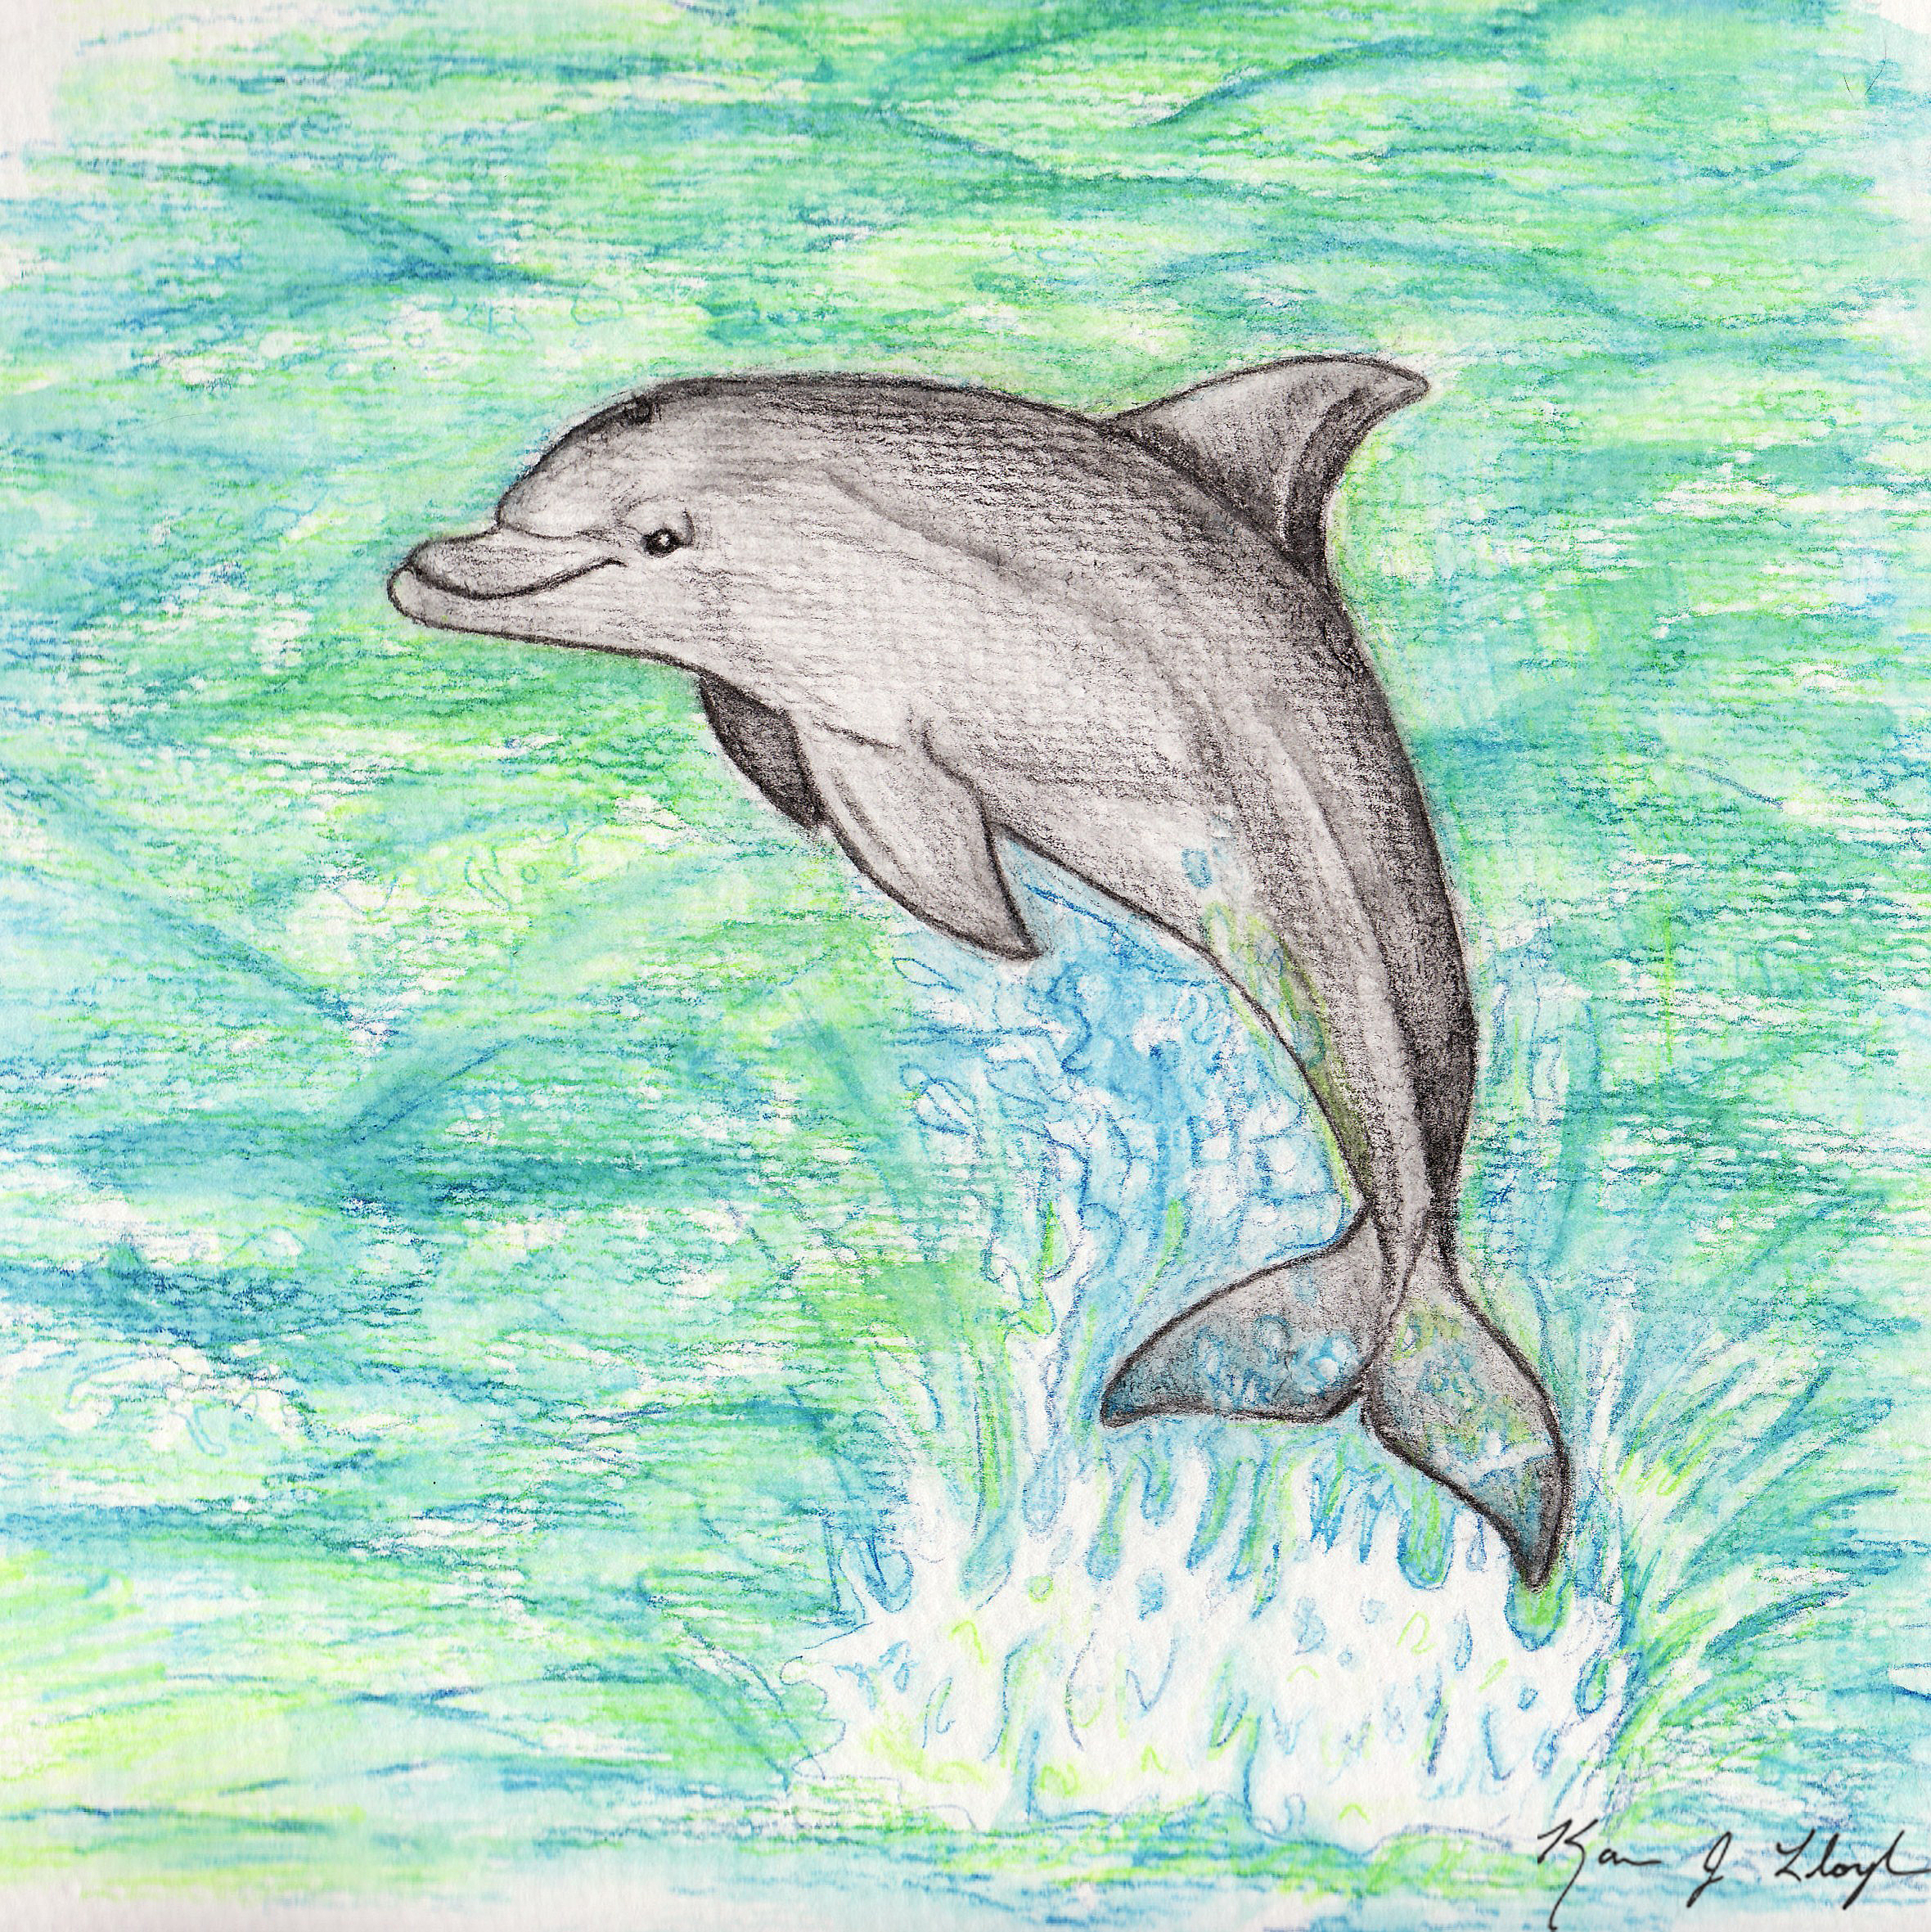 "Mystic Dolphin"